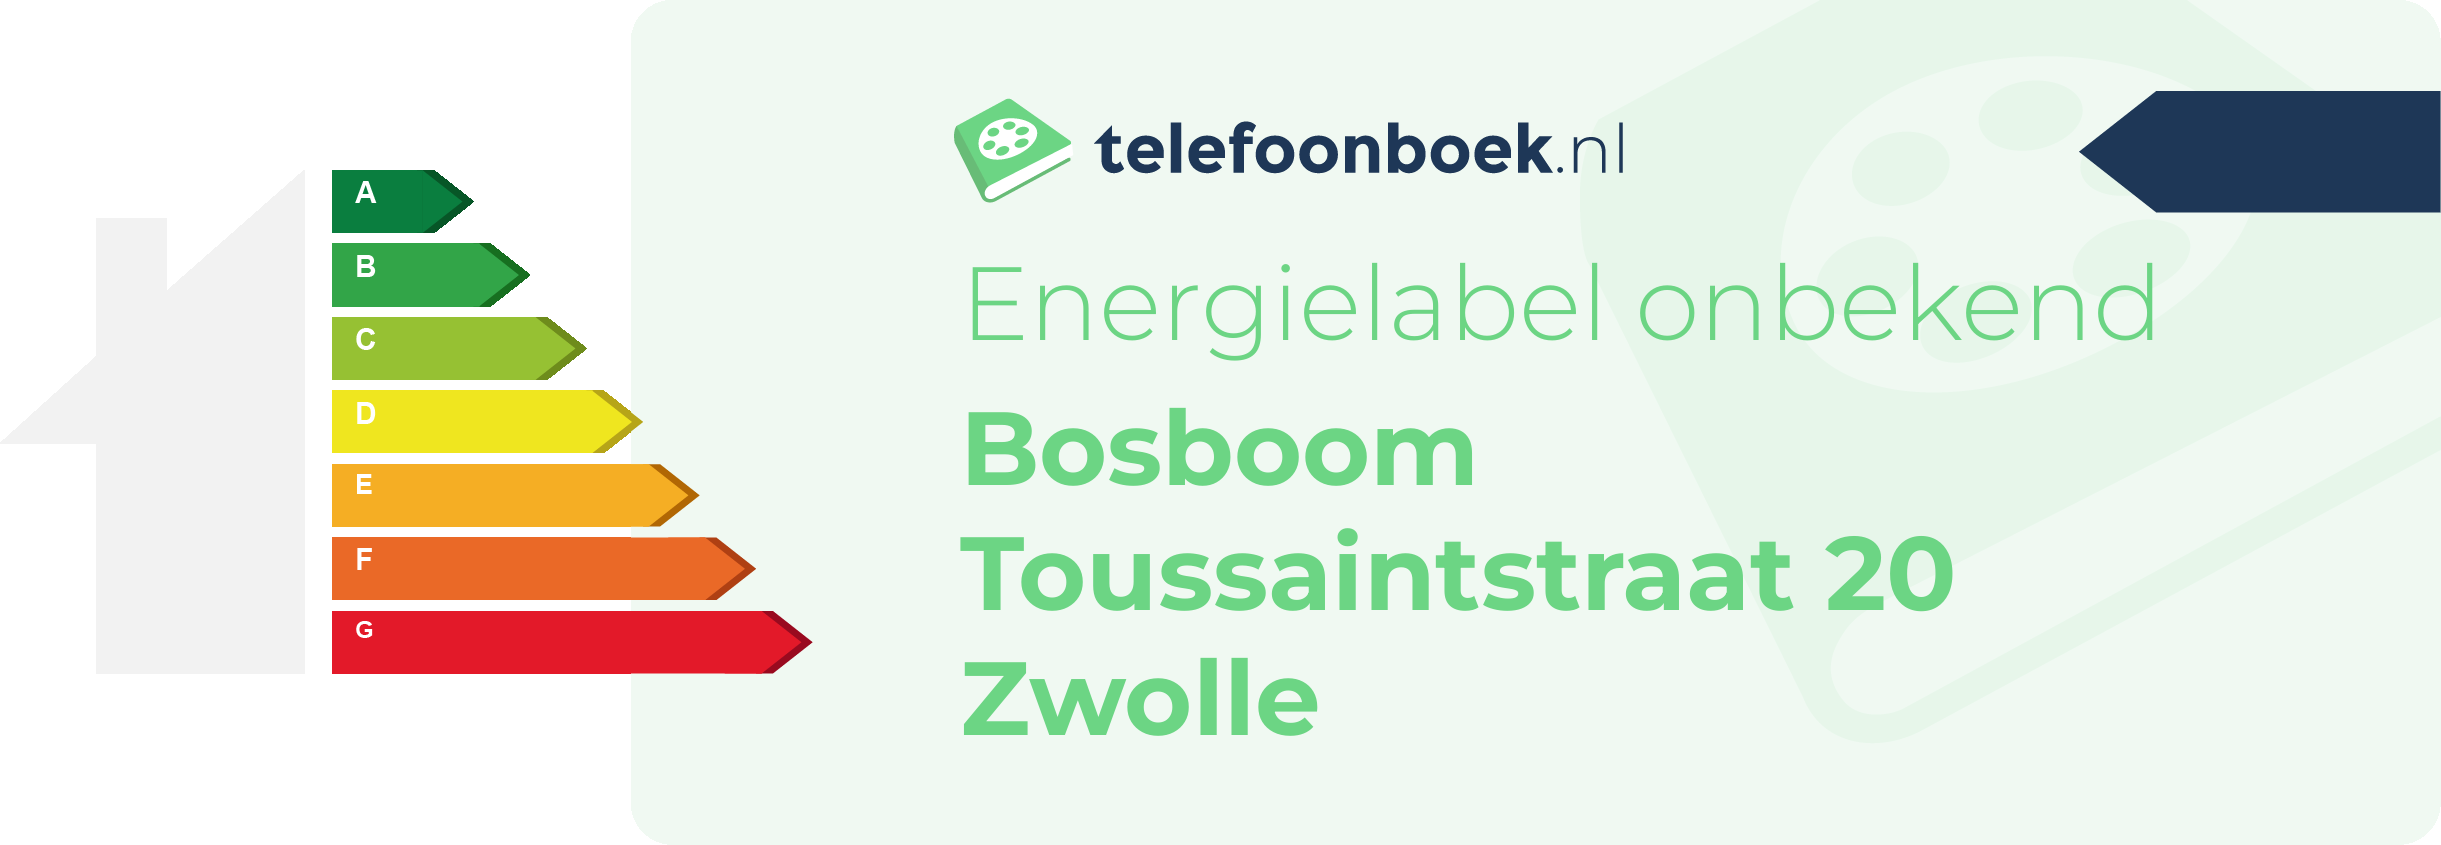 Energielabel Bosboom Toussaintstraat 20 Zwolle